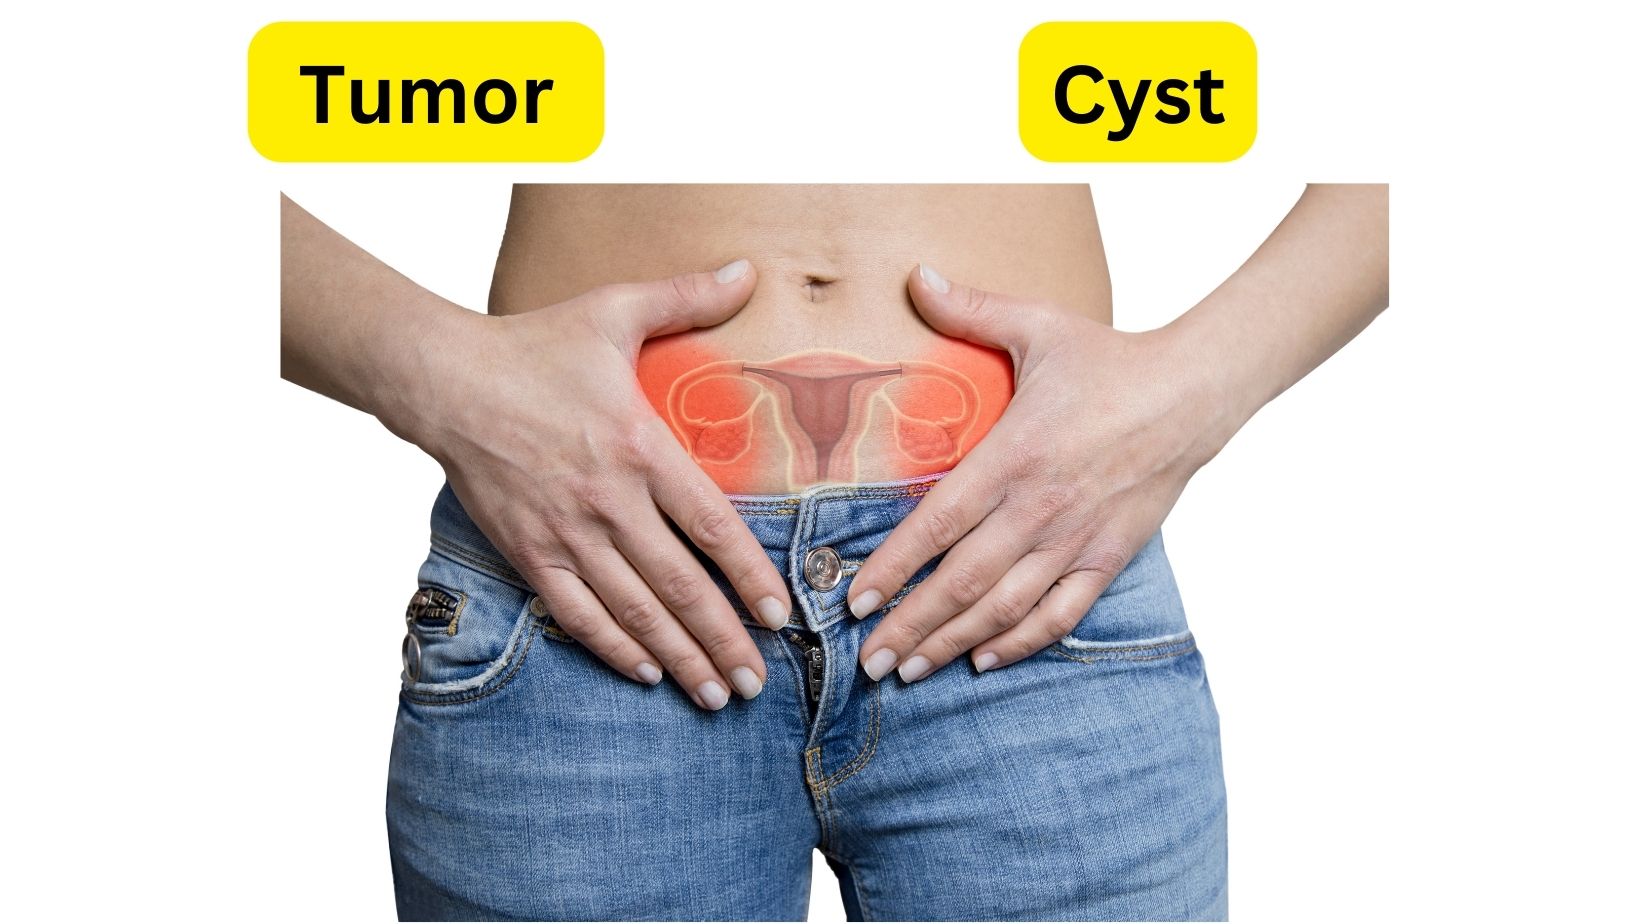 cyst vs tumor